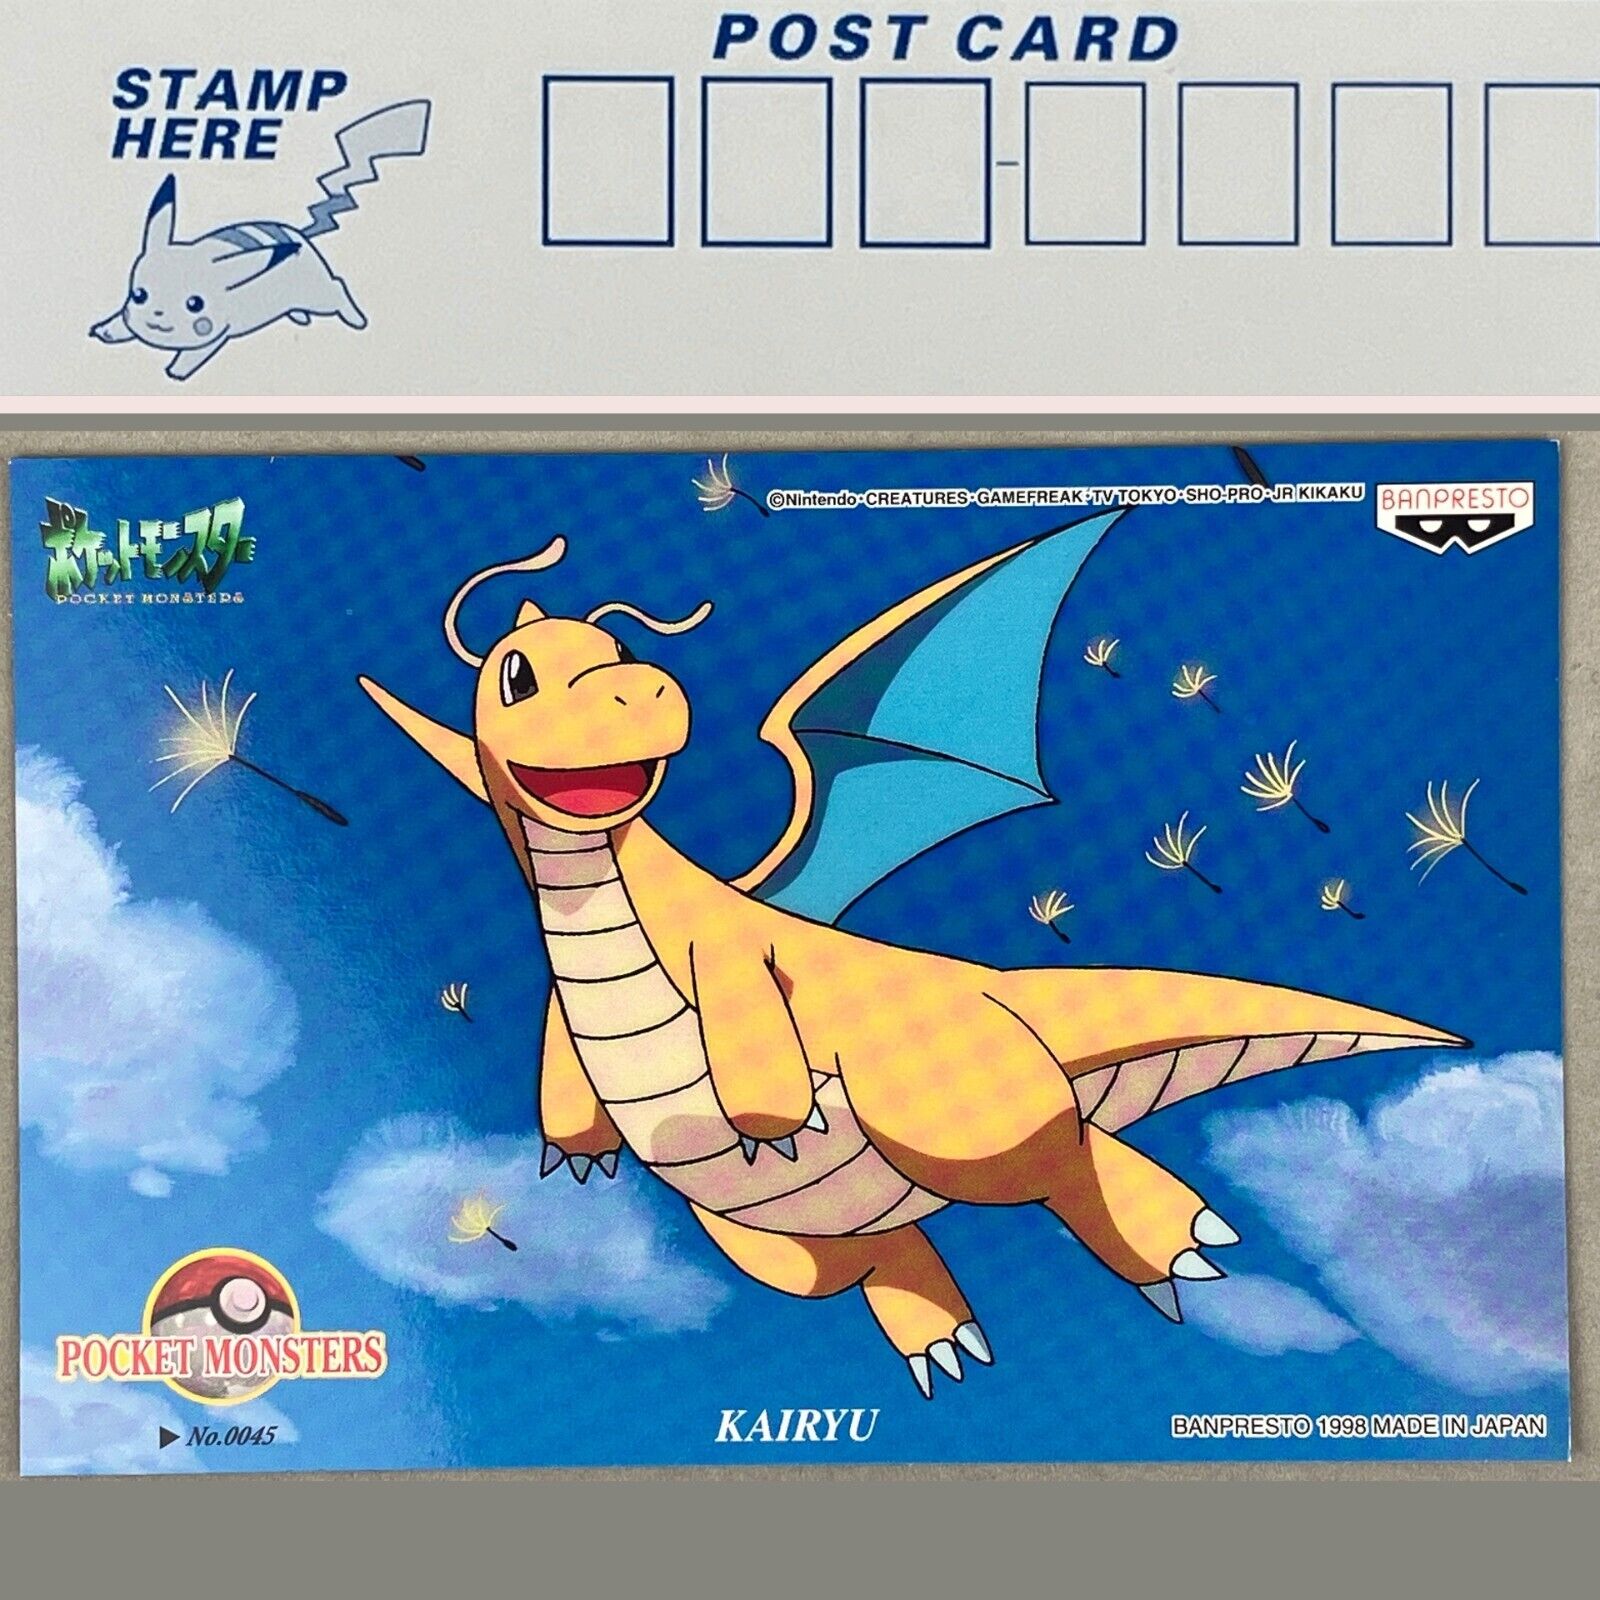 1998 Banpresto Pokémon Dragonite 0045 Character Mail Collection Anime Postcard